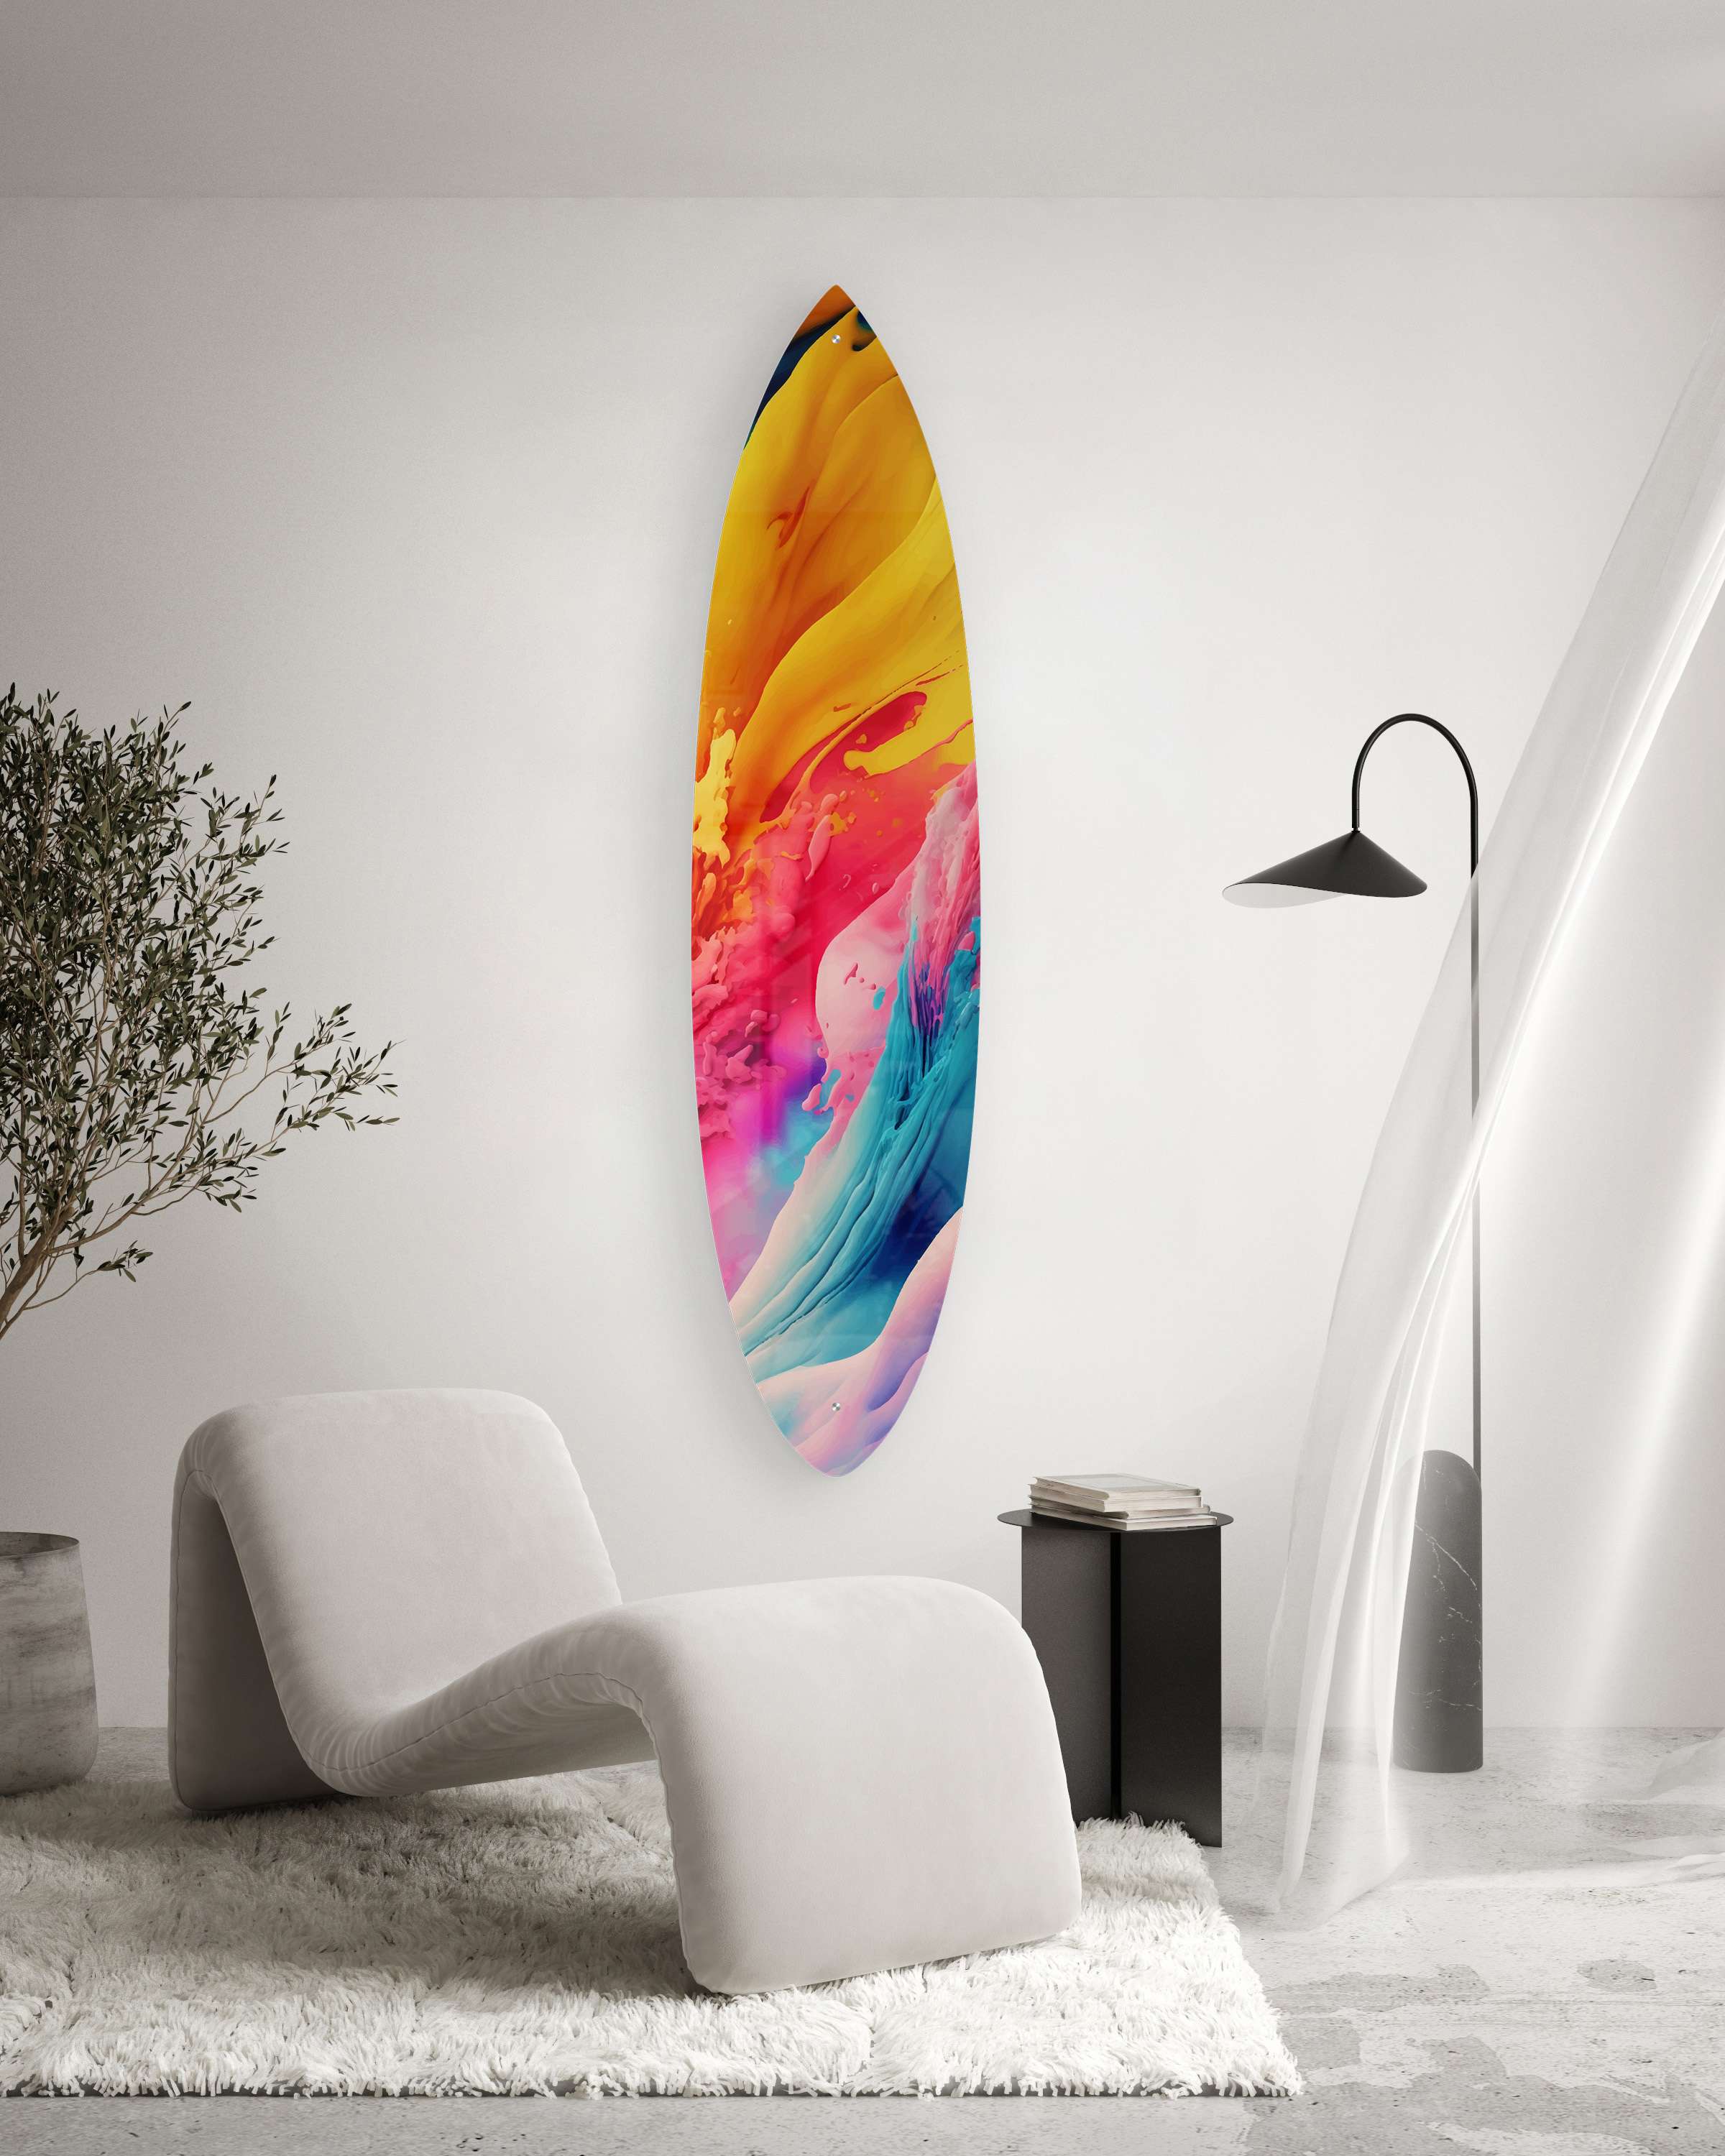 Black and White Wall Art Beach House Decor: Love Surfboards